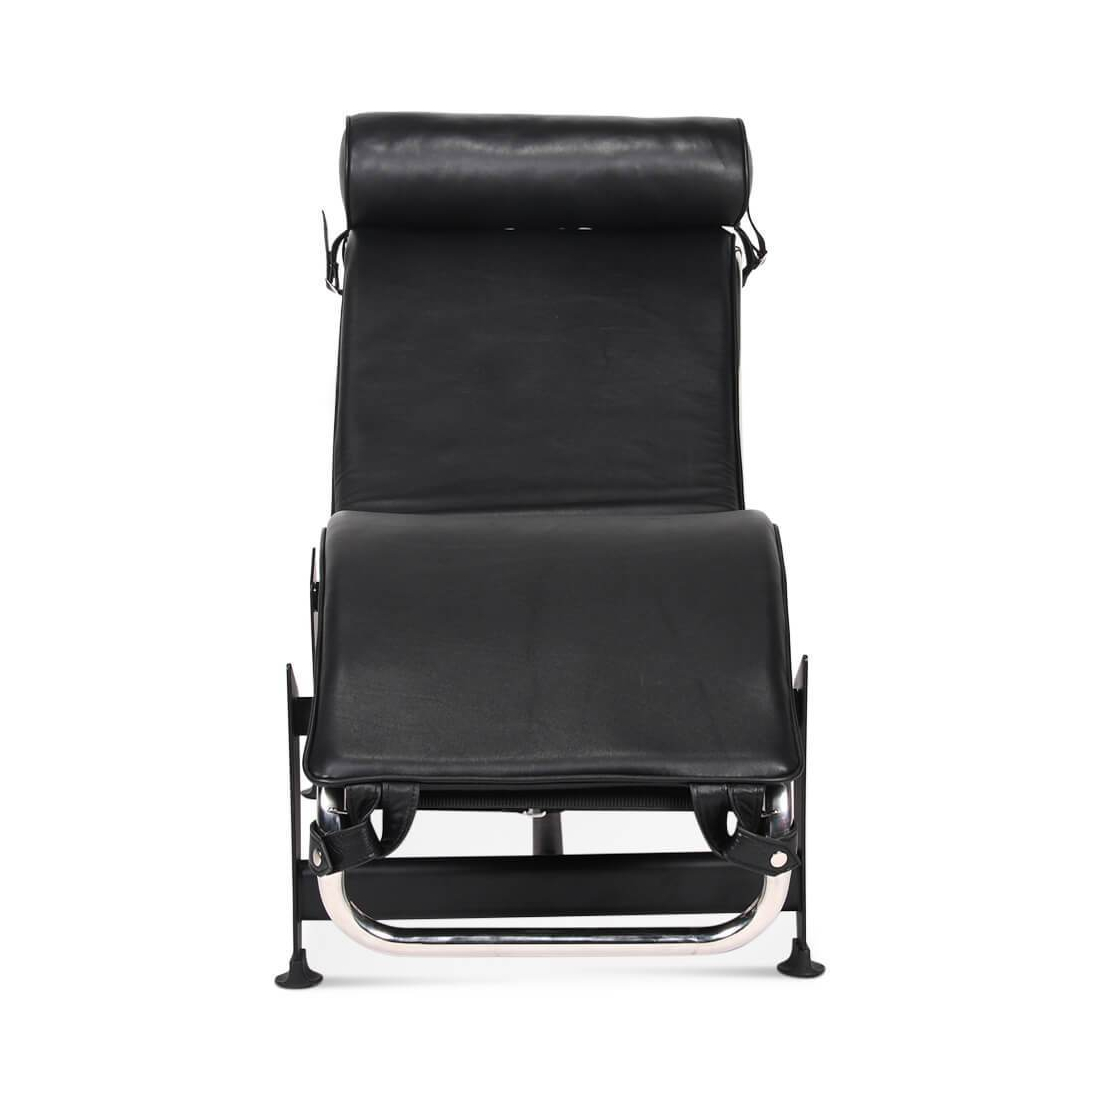 Corbusier Chaise Lounge Chair
